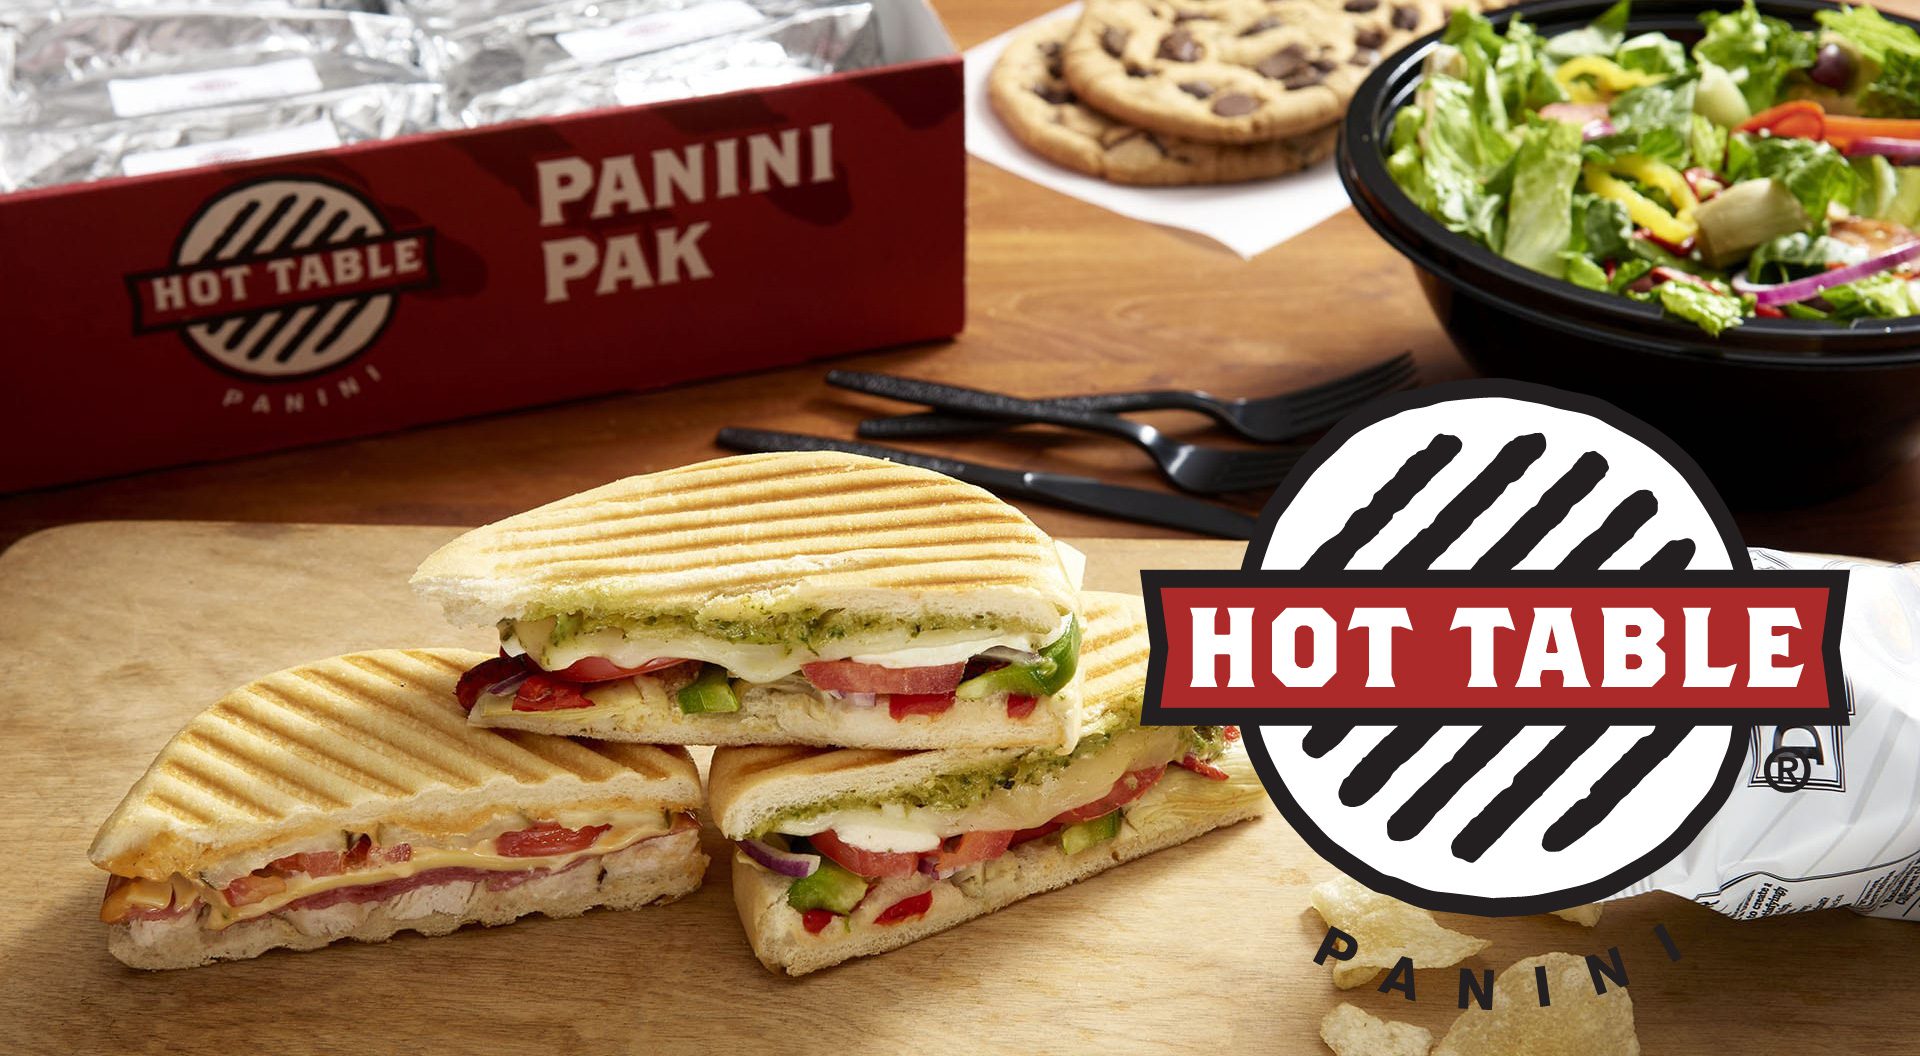 Hot Table panini and logo